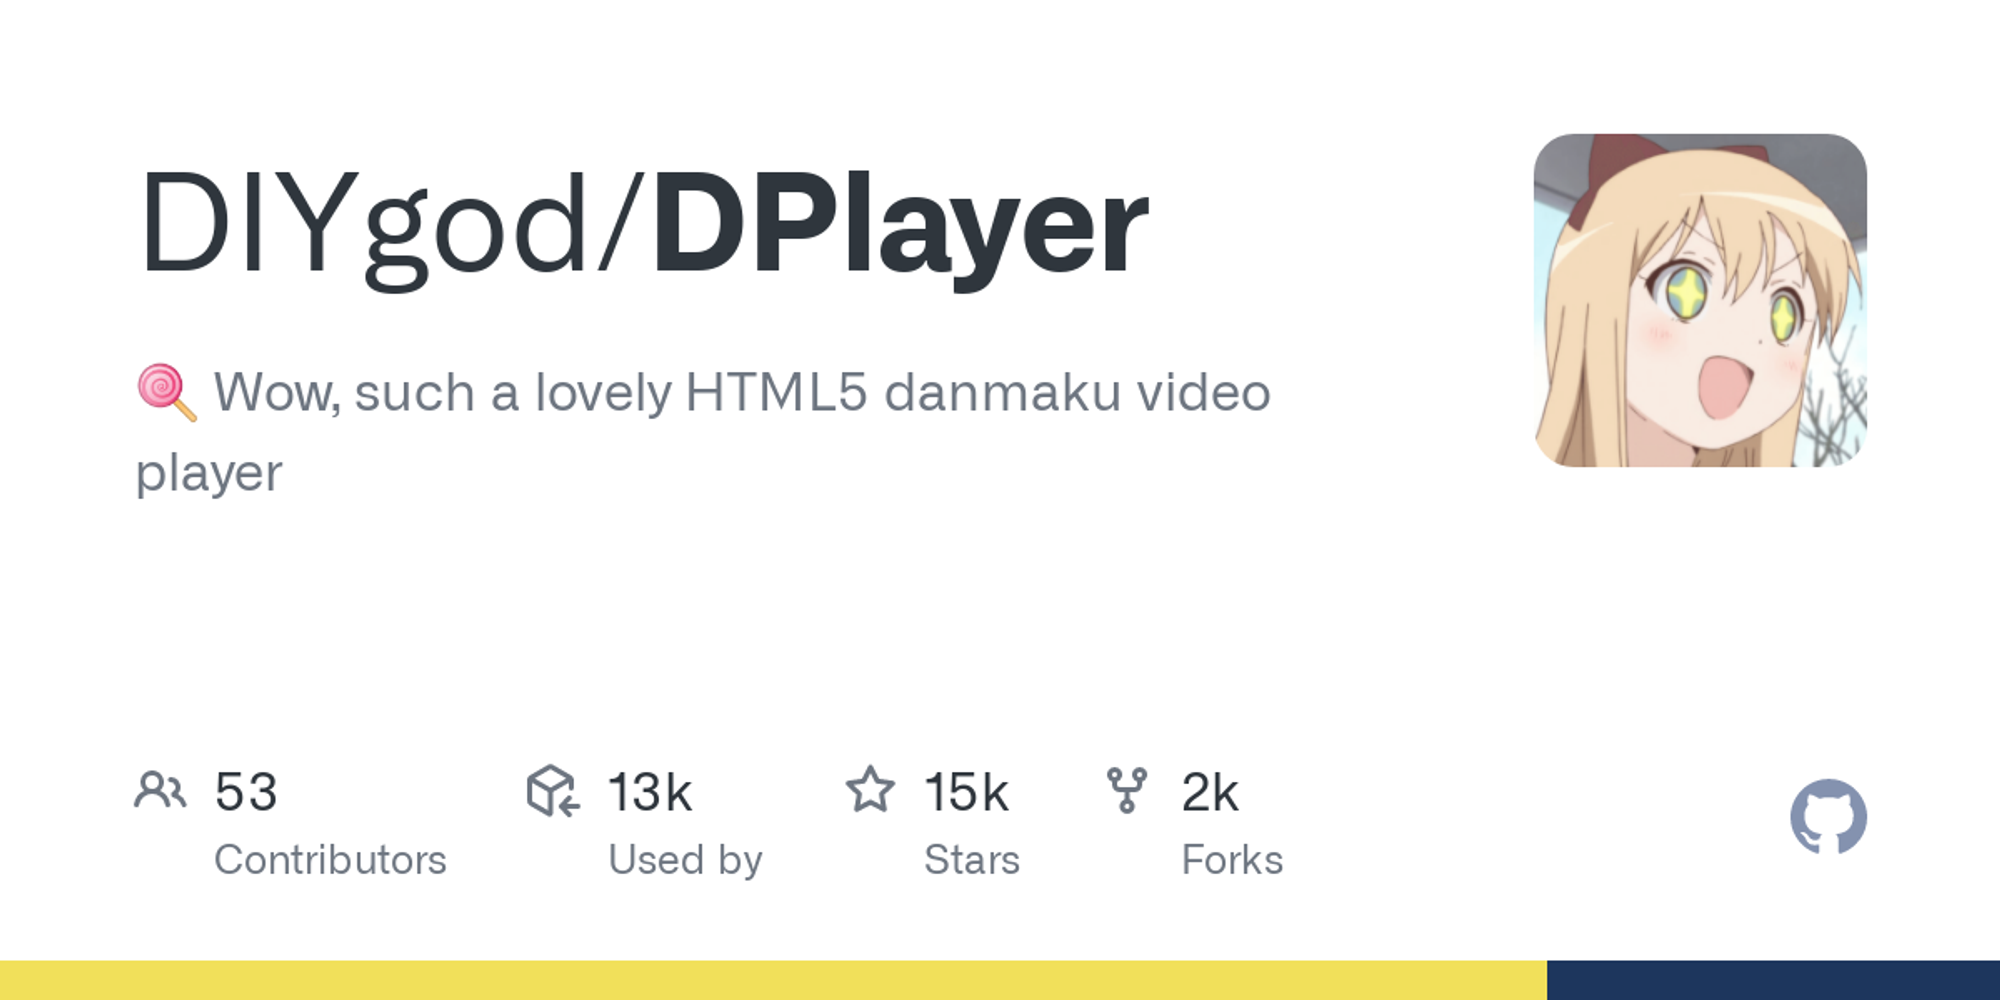 GitHub - DIYgod/DPlayer: Wow, such a lovely HTML5 danmaku video player